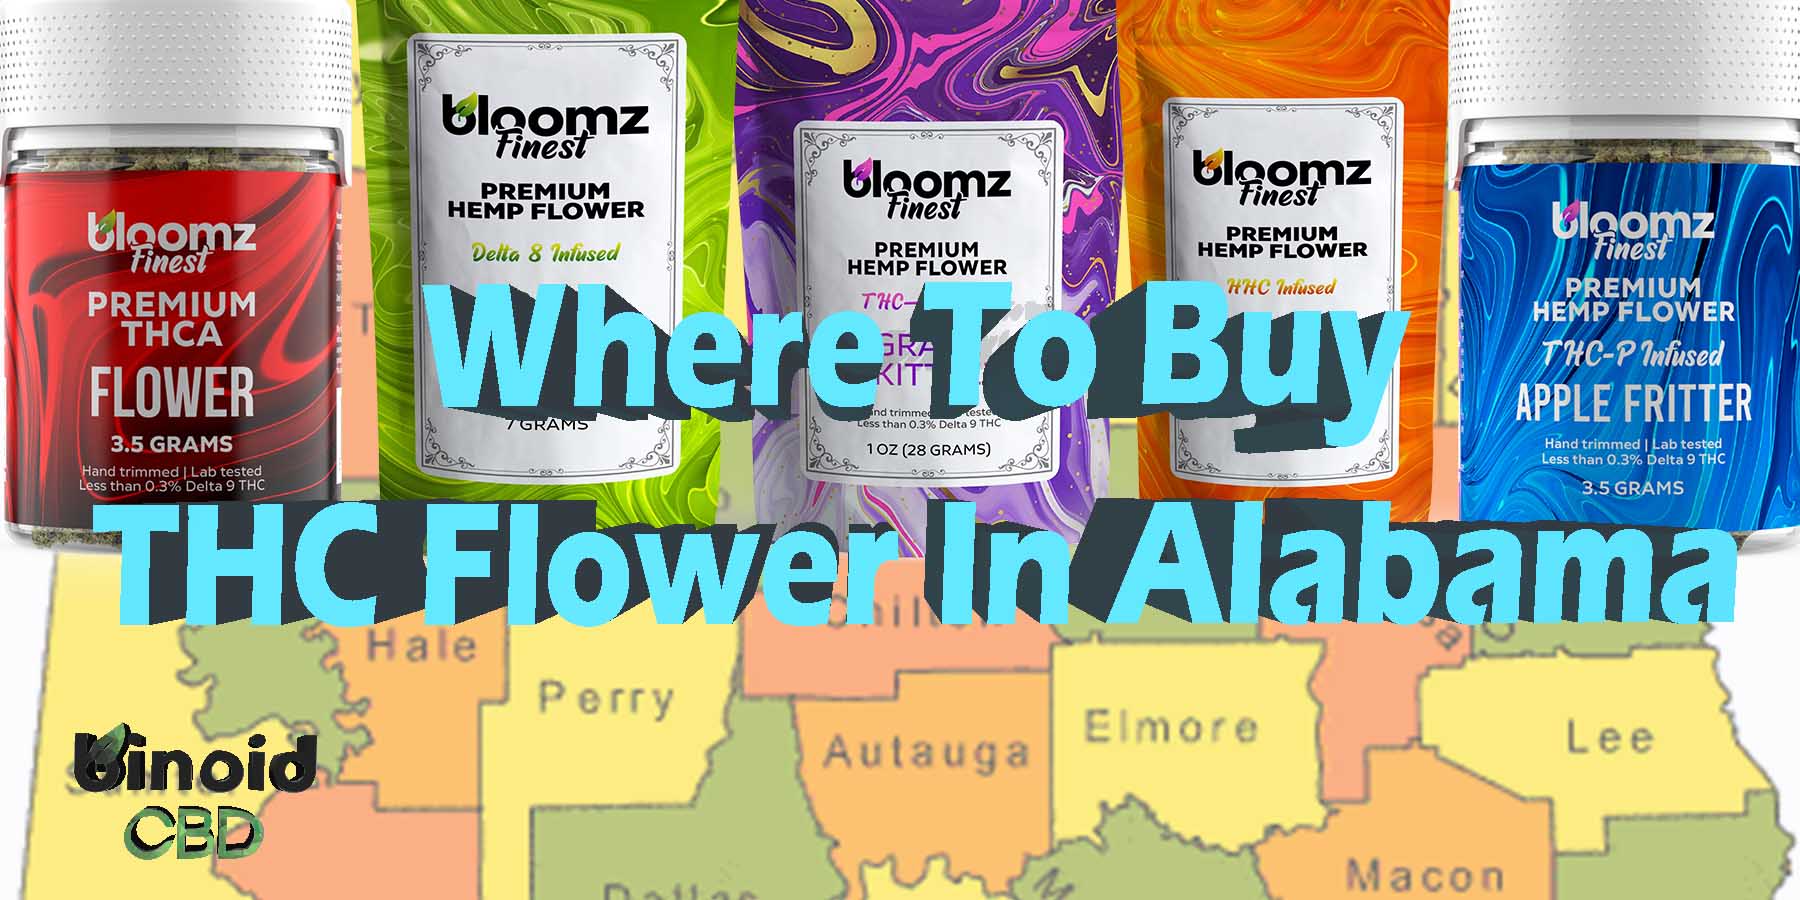 Buy THC Flower Alabama Joints PreRolls Get Online Near Me For Sale Best Brand Strongest Real Legal Store Shop Reddit Binoid